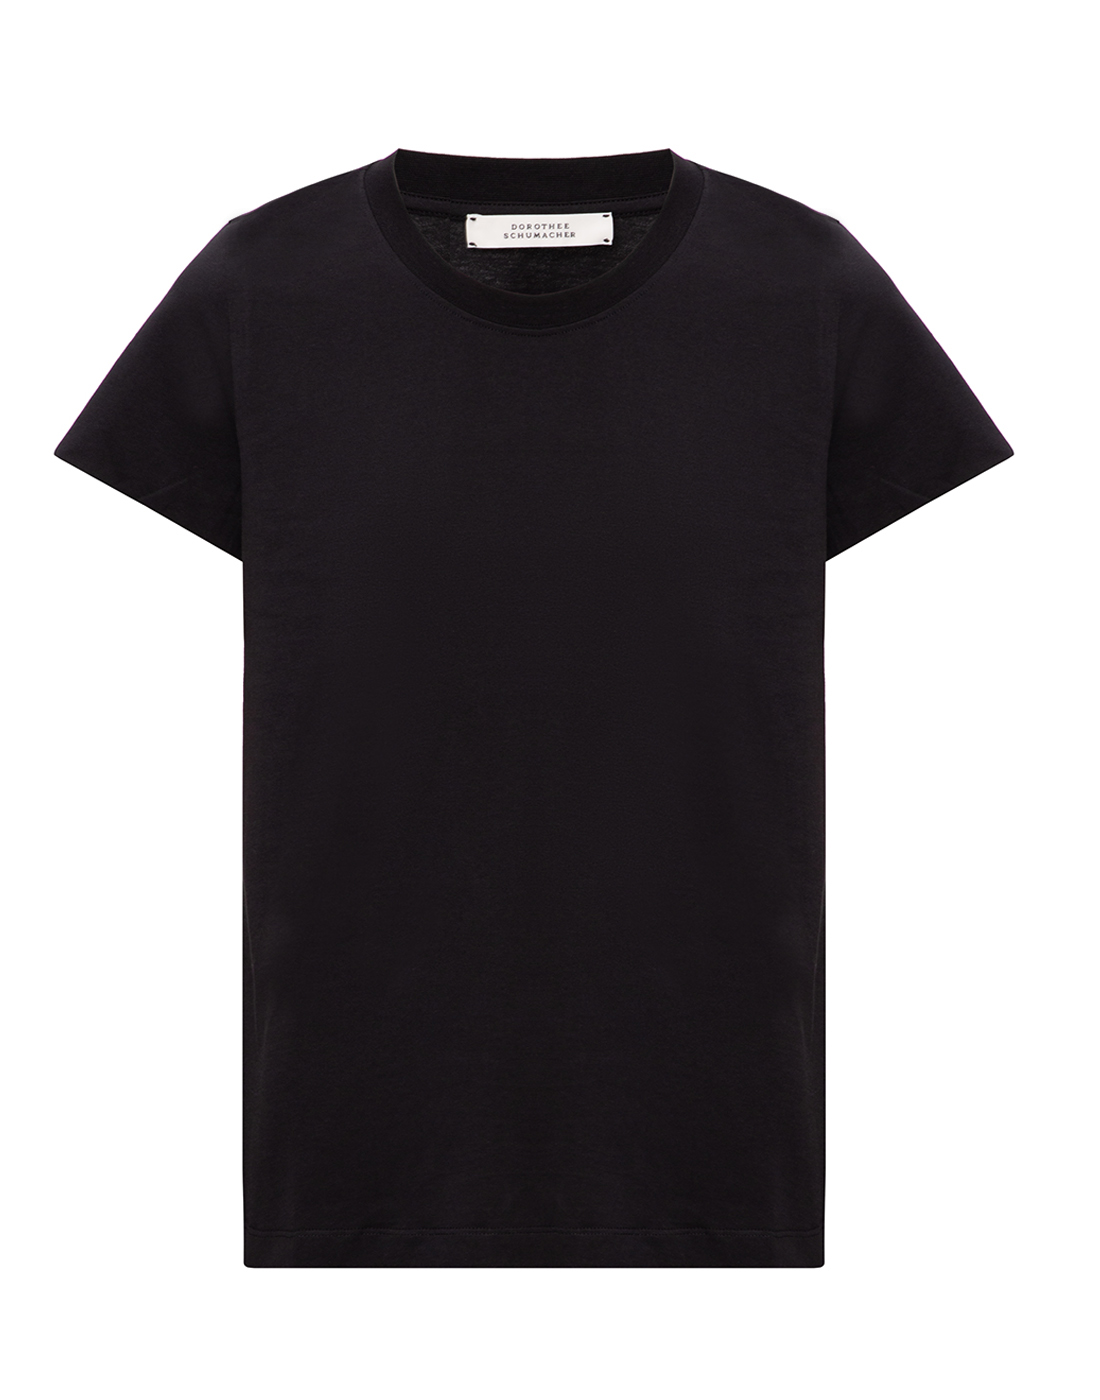 Женская черная футболка Dorothee Schumacher S623001/999-1